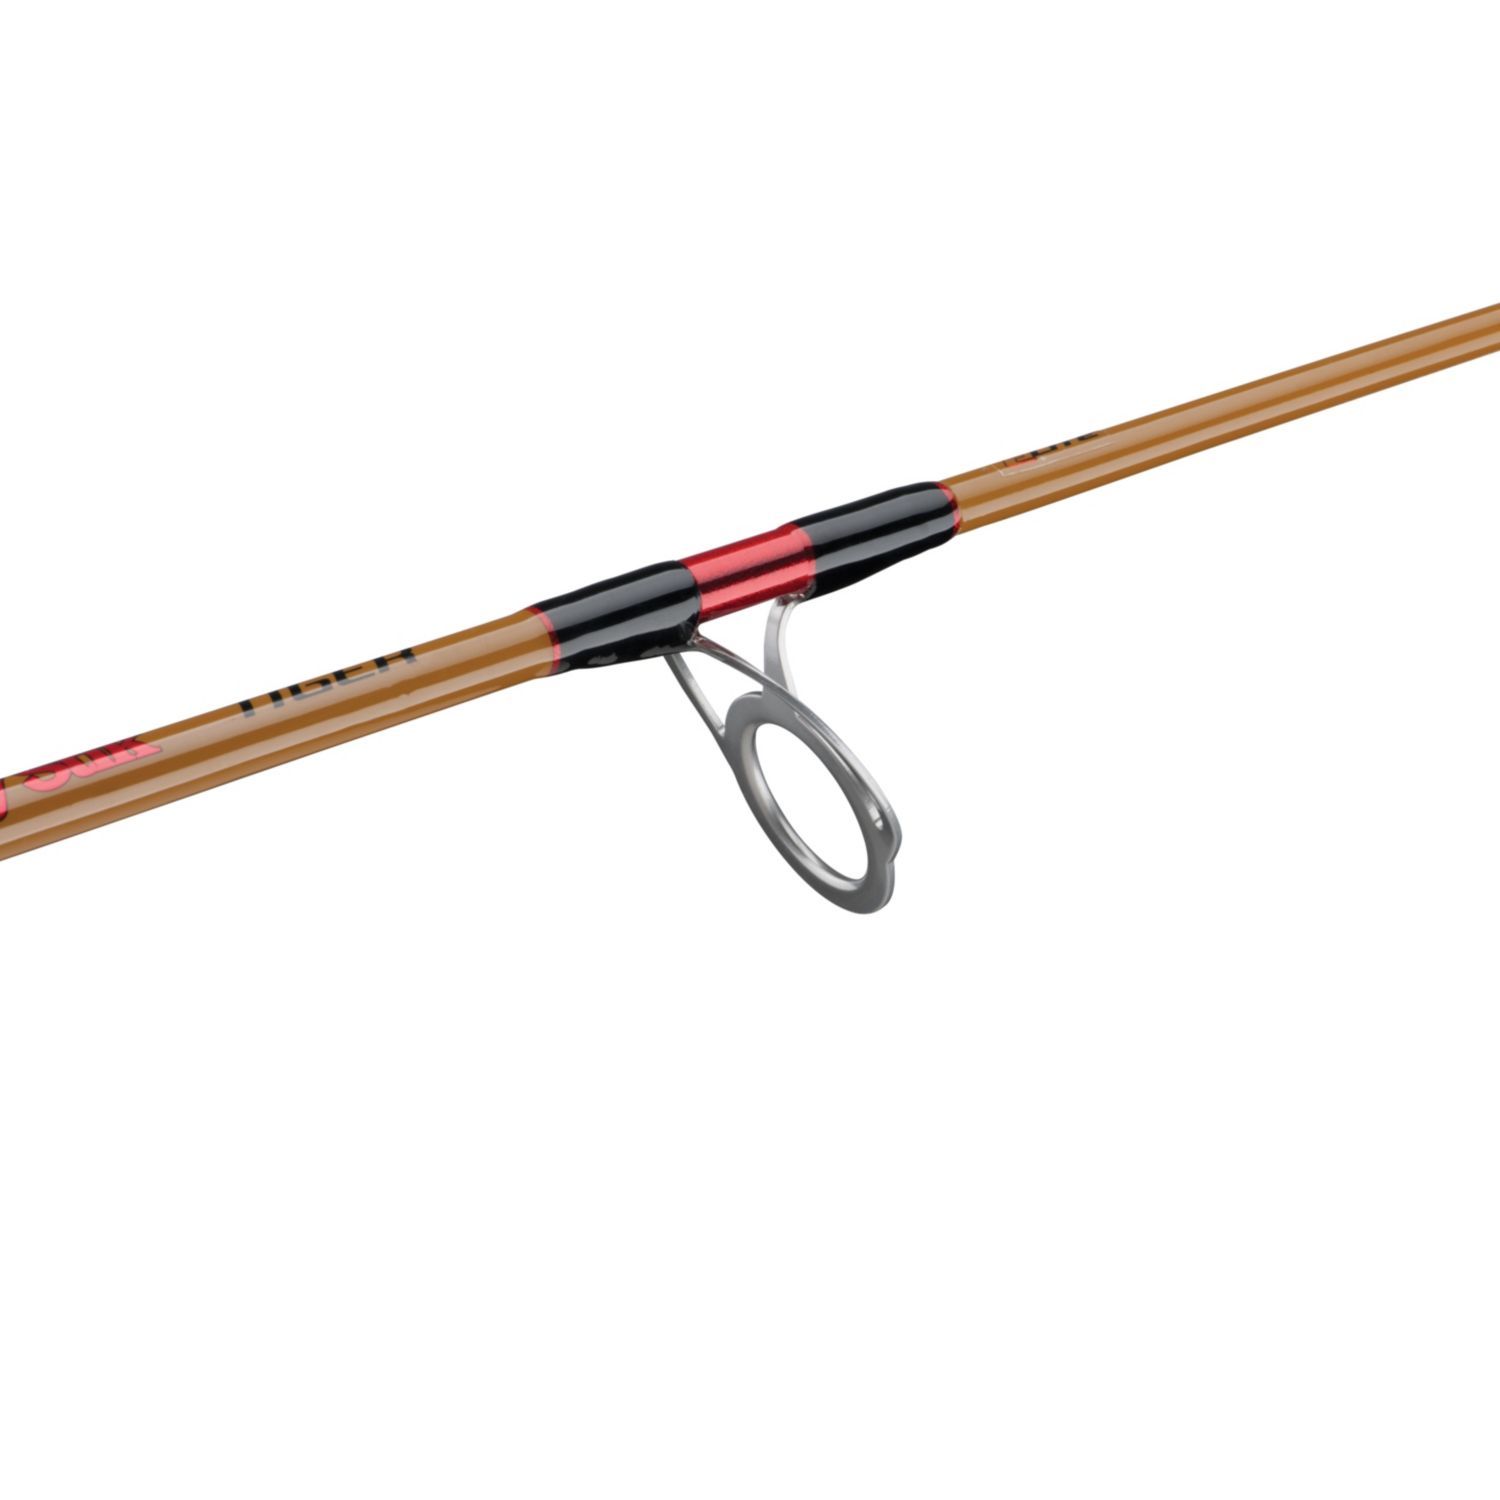 Vintage Shakespeare Tiger WMTSP 70 2M 7’0” 2-piece spinning fishing rod 